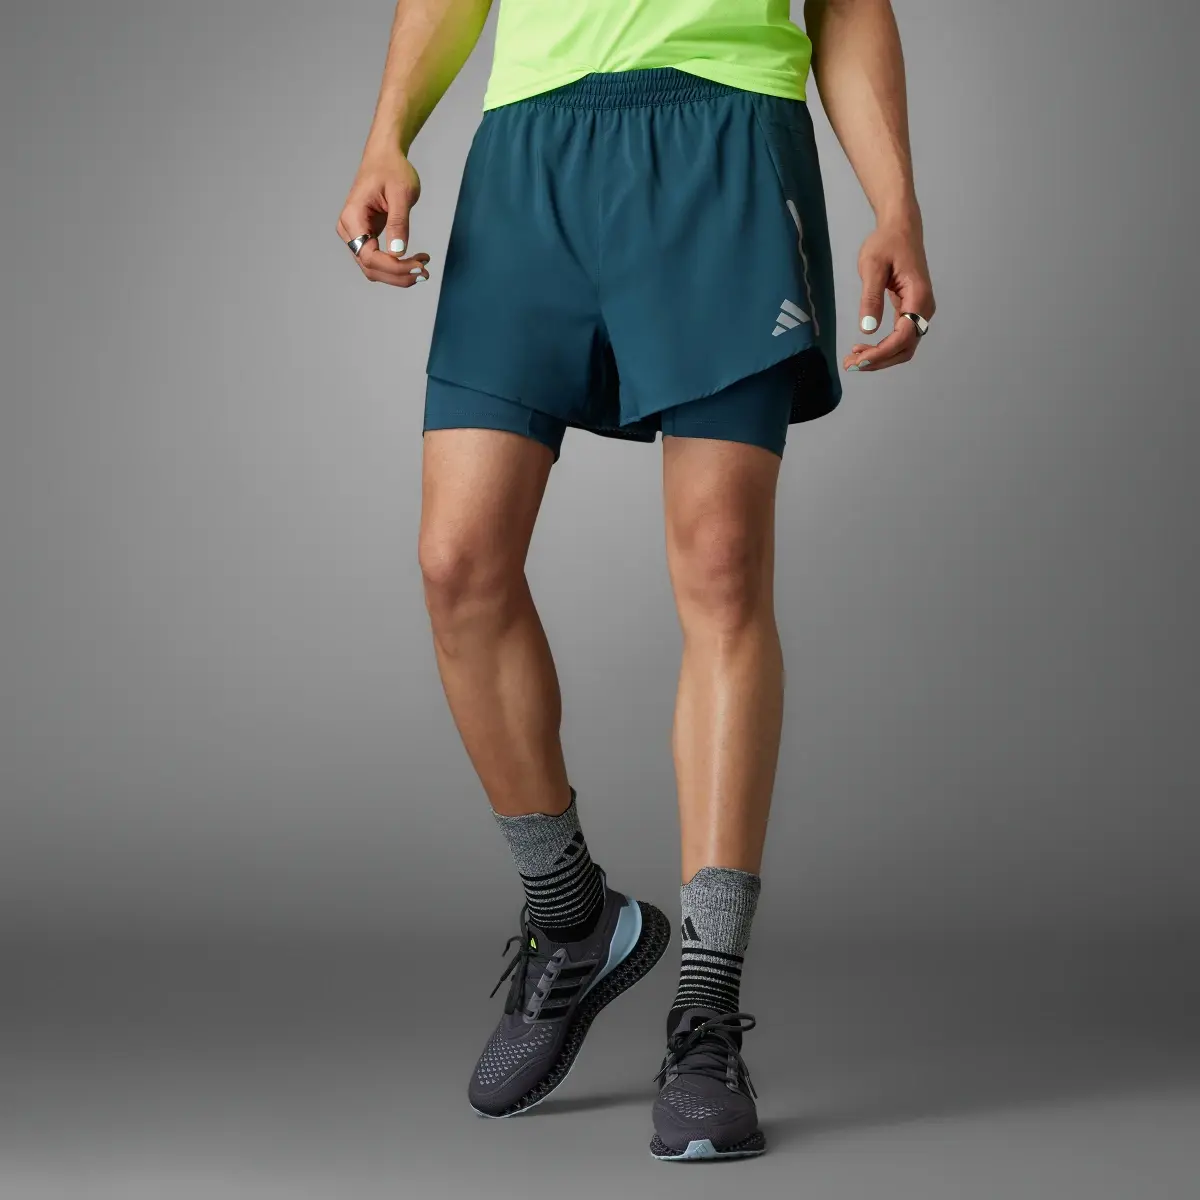 Adidas Designed 4 Running 2-in-1 Shorts. 1